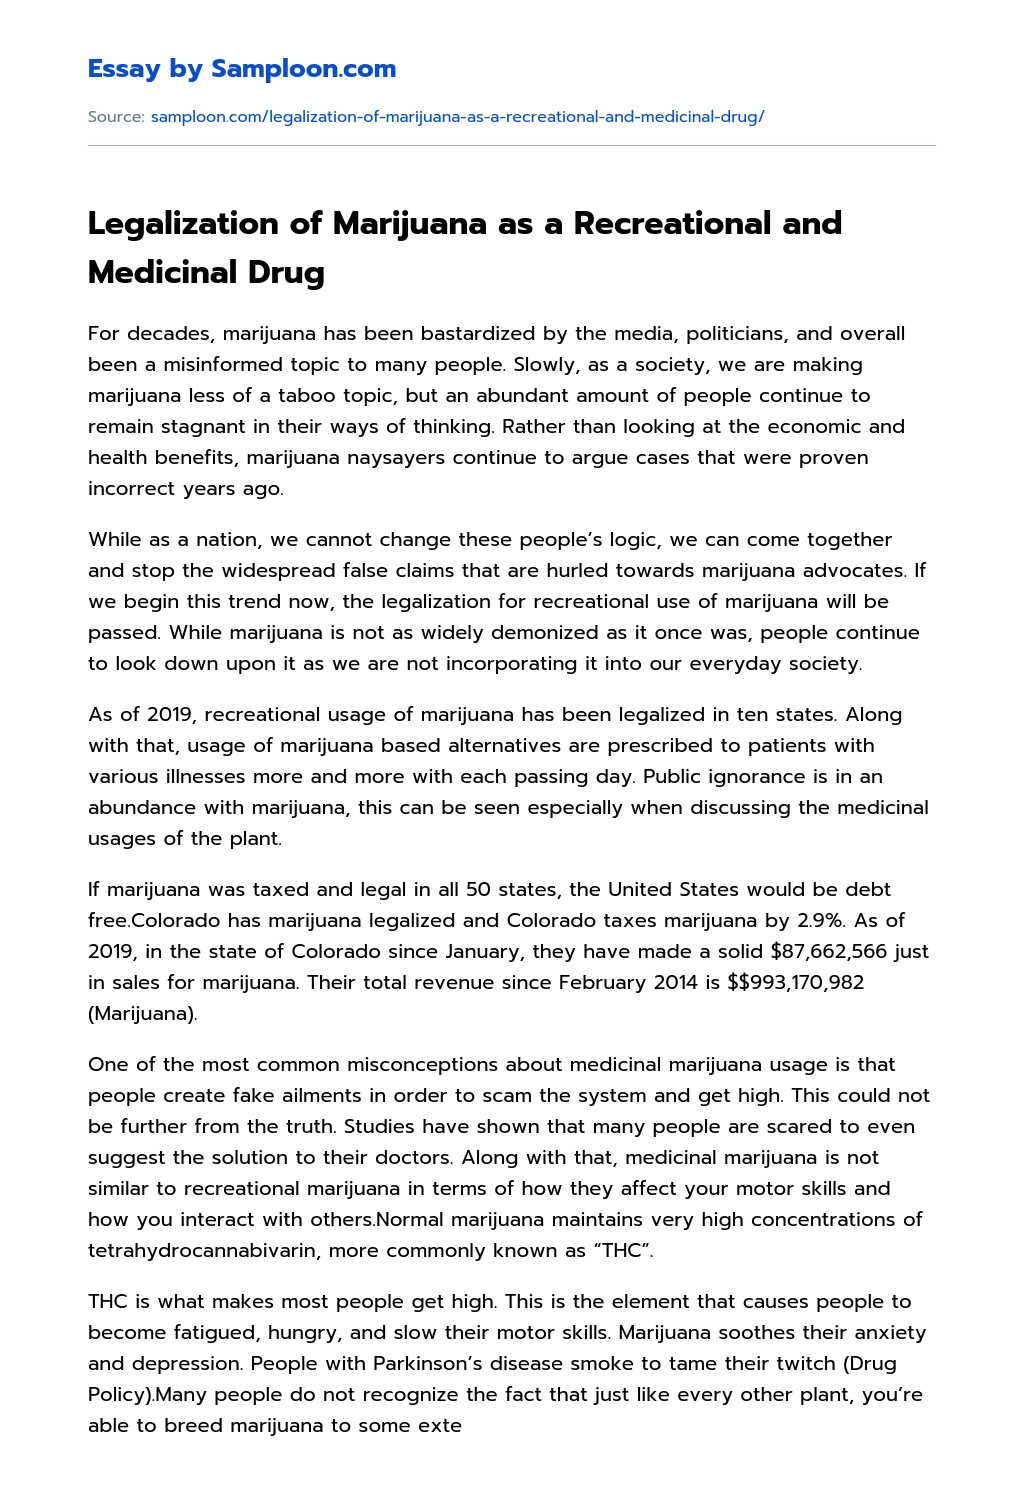 Legalization of Marijuana as a Recreational and Medicinal Drug essay